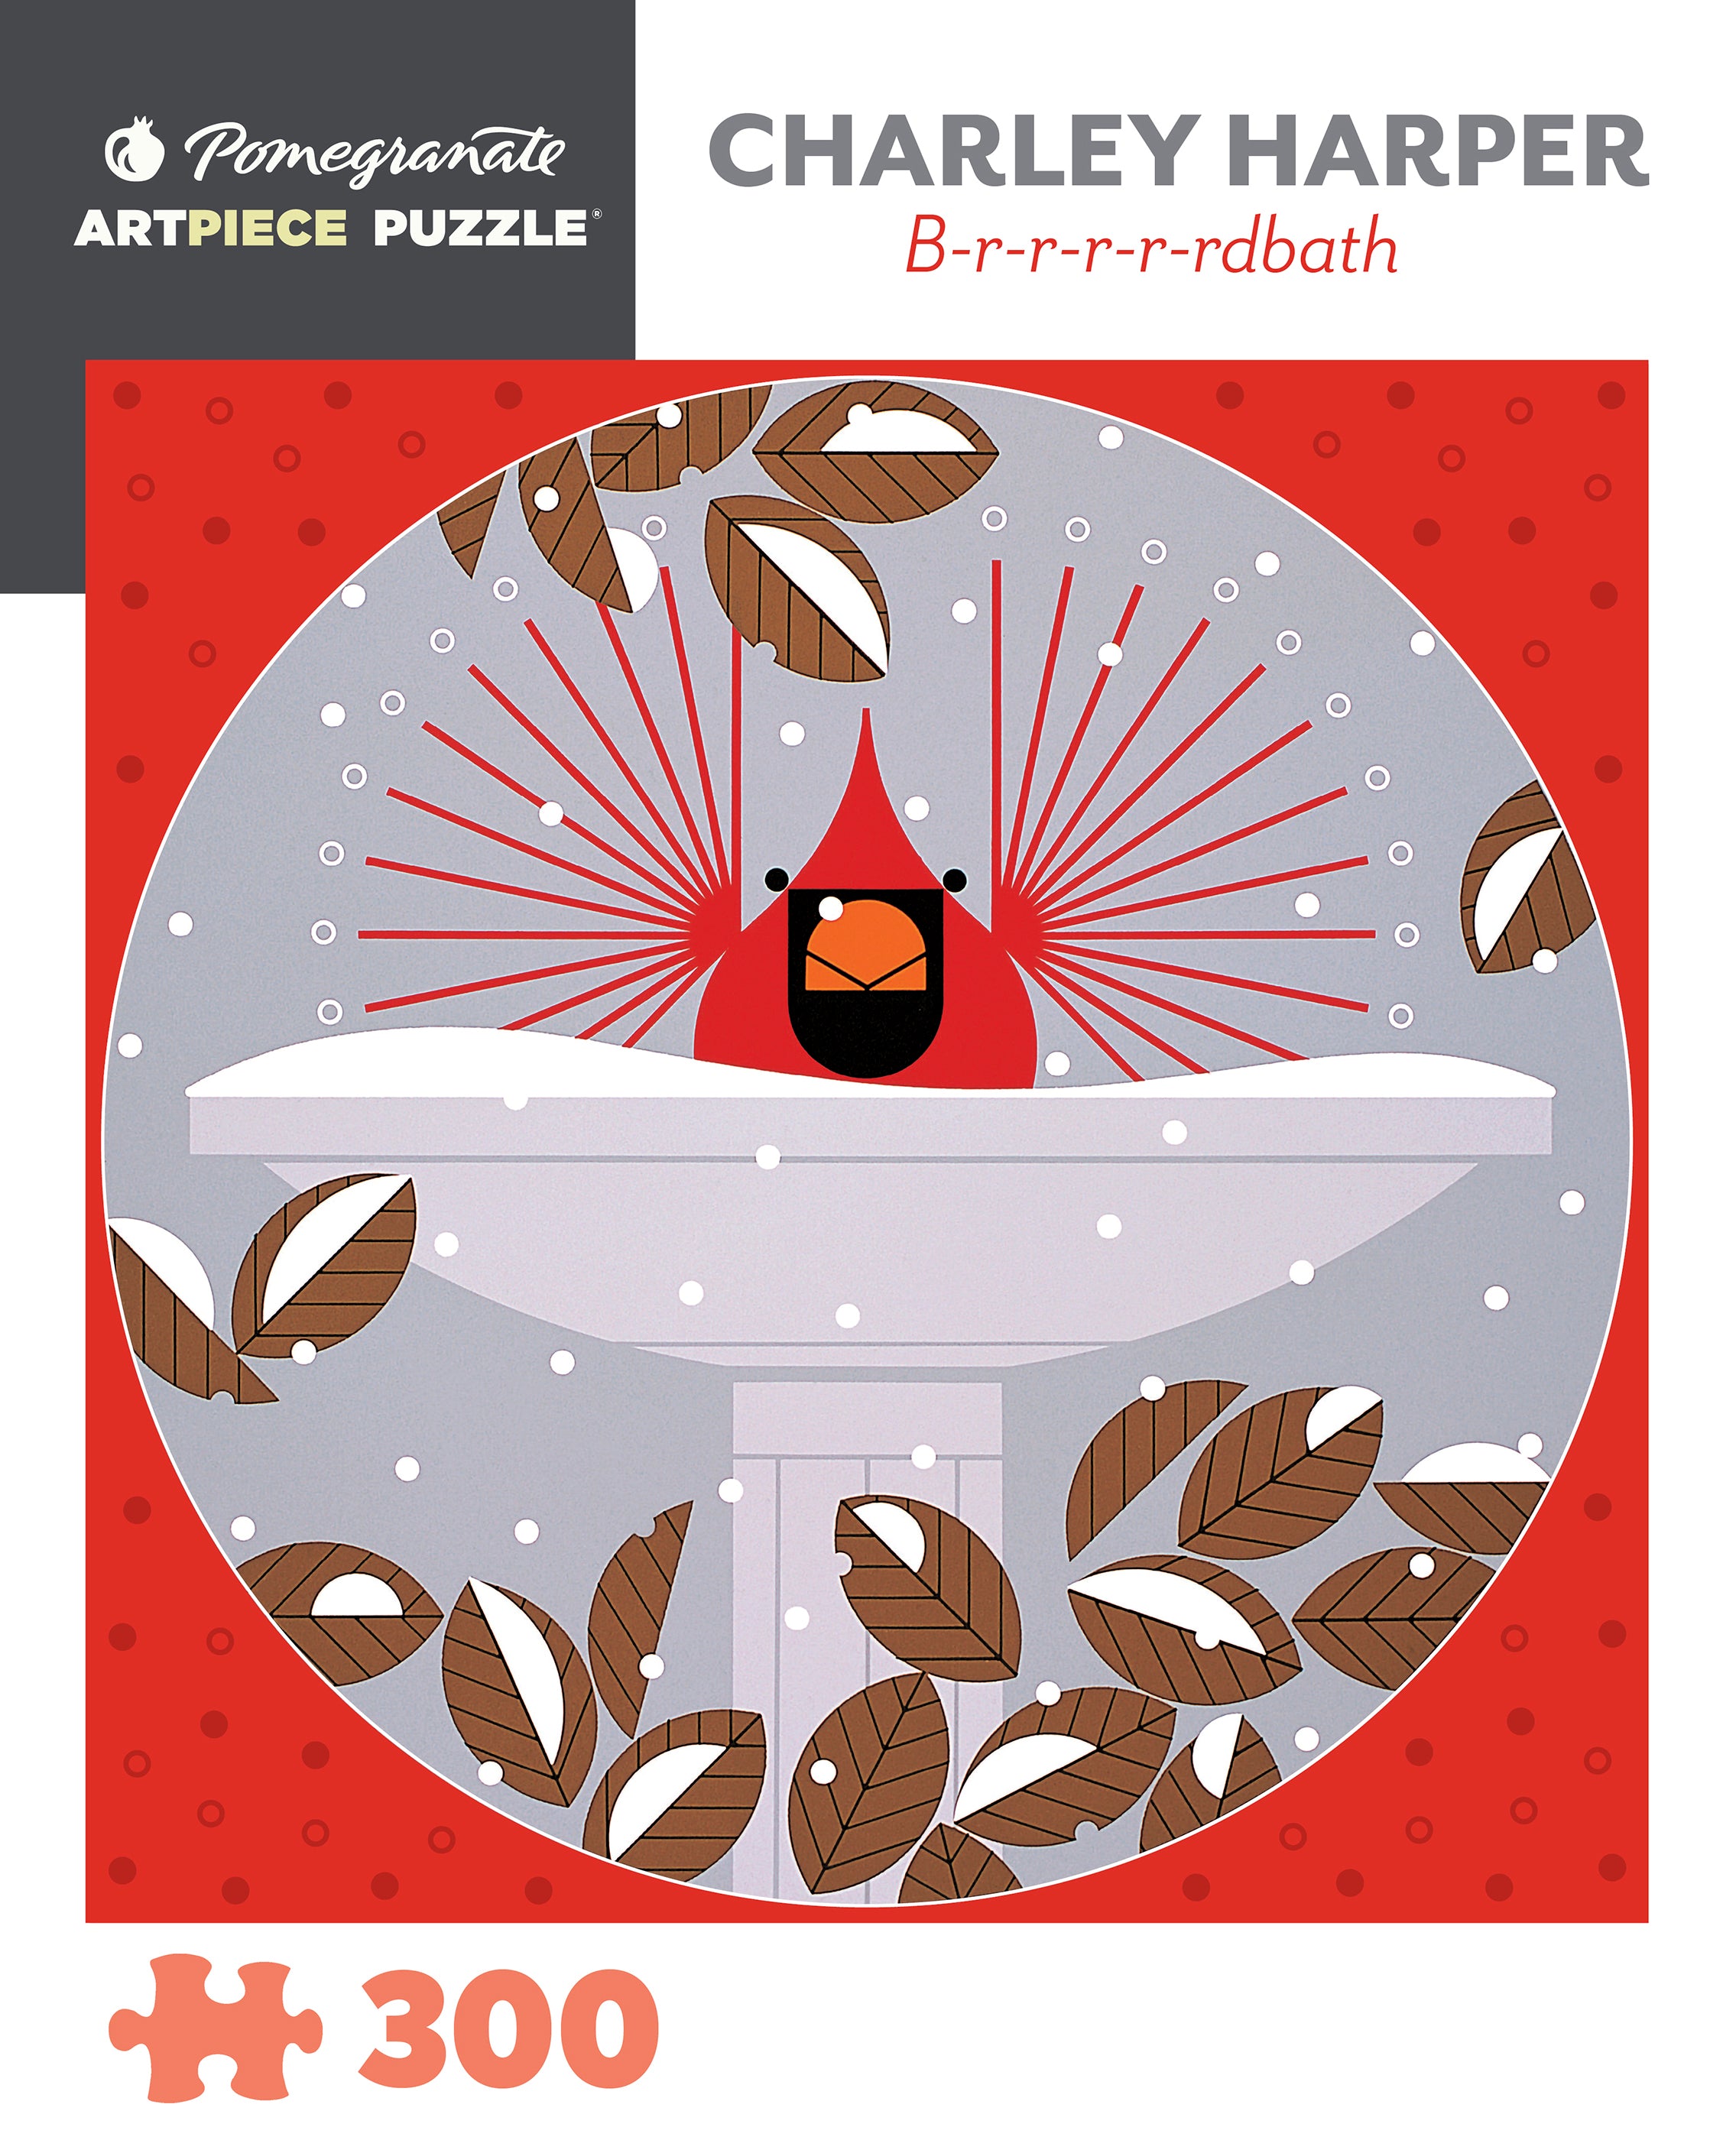 Charley Harper "Brrrrrdbath" 300-Piece Jigsaw Puzzle